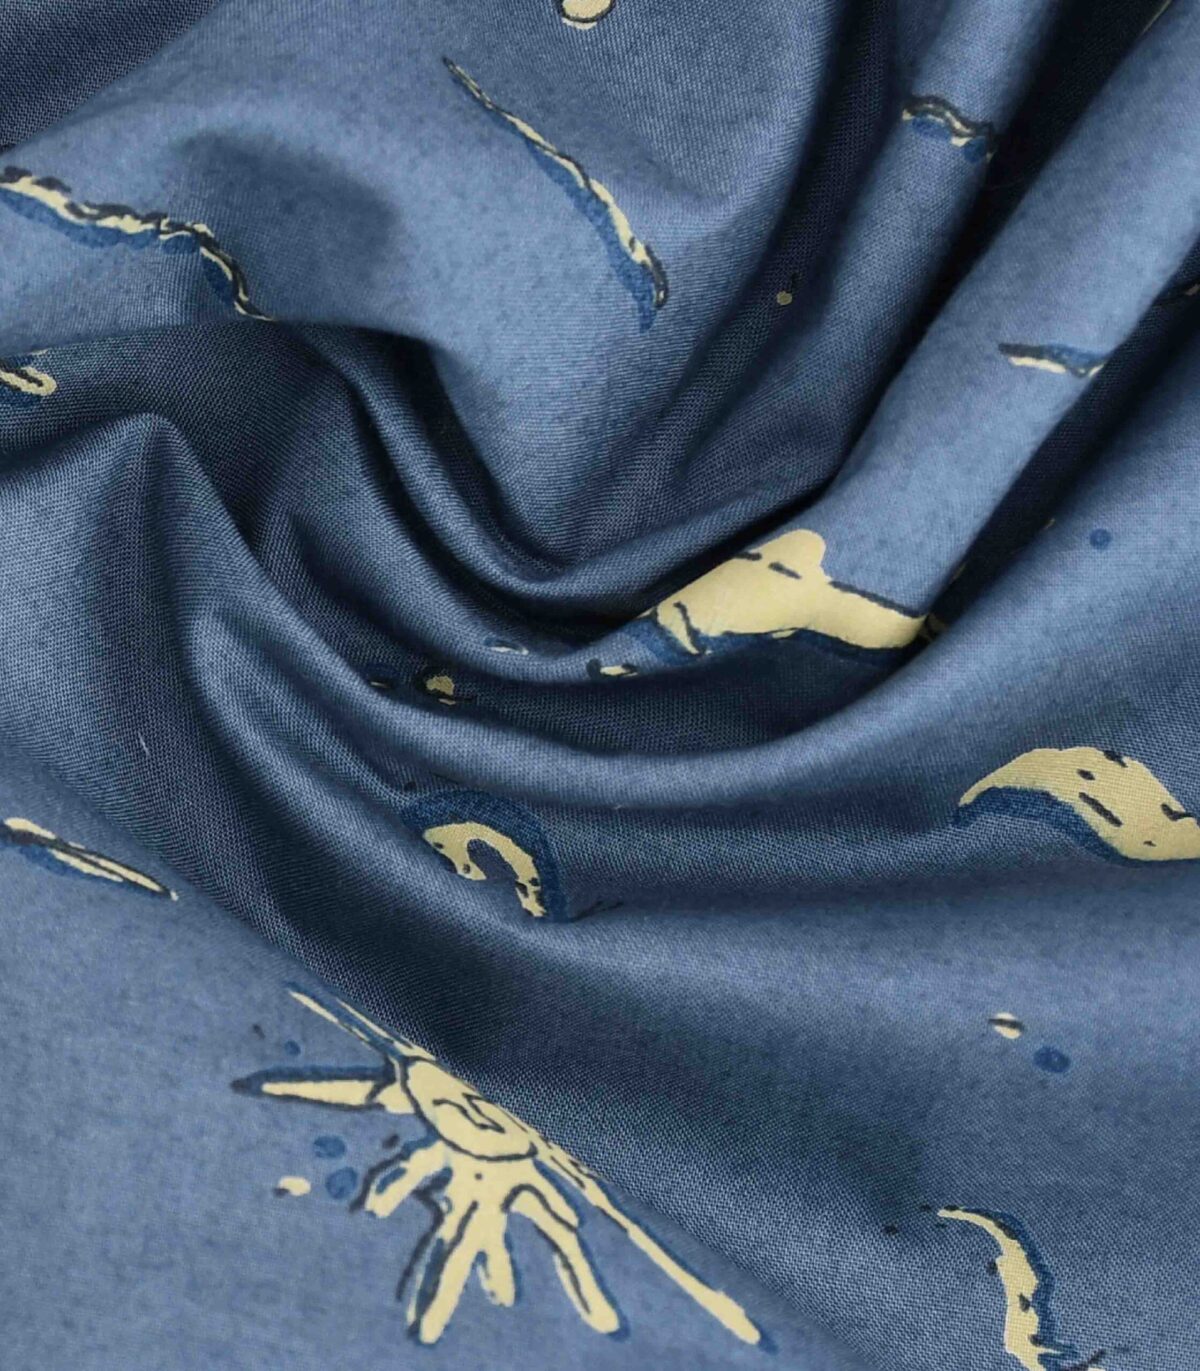 Grey Base Sea Animal Print Fabric